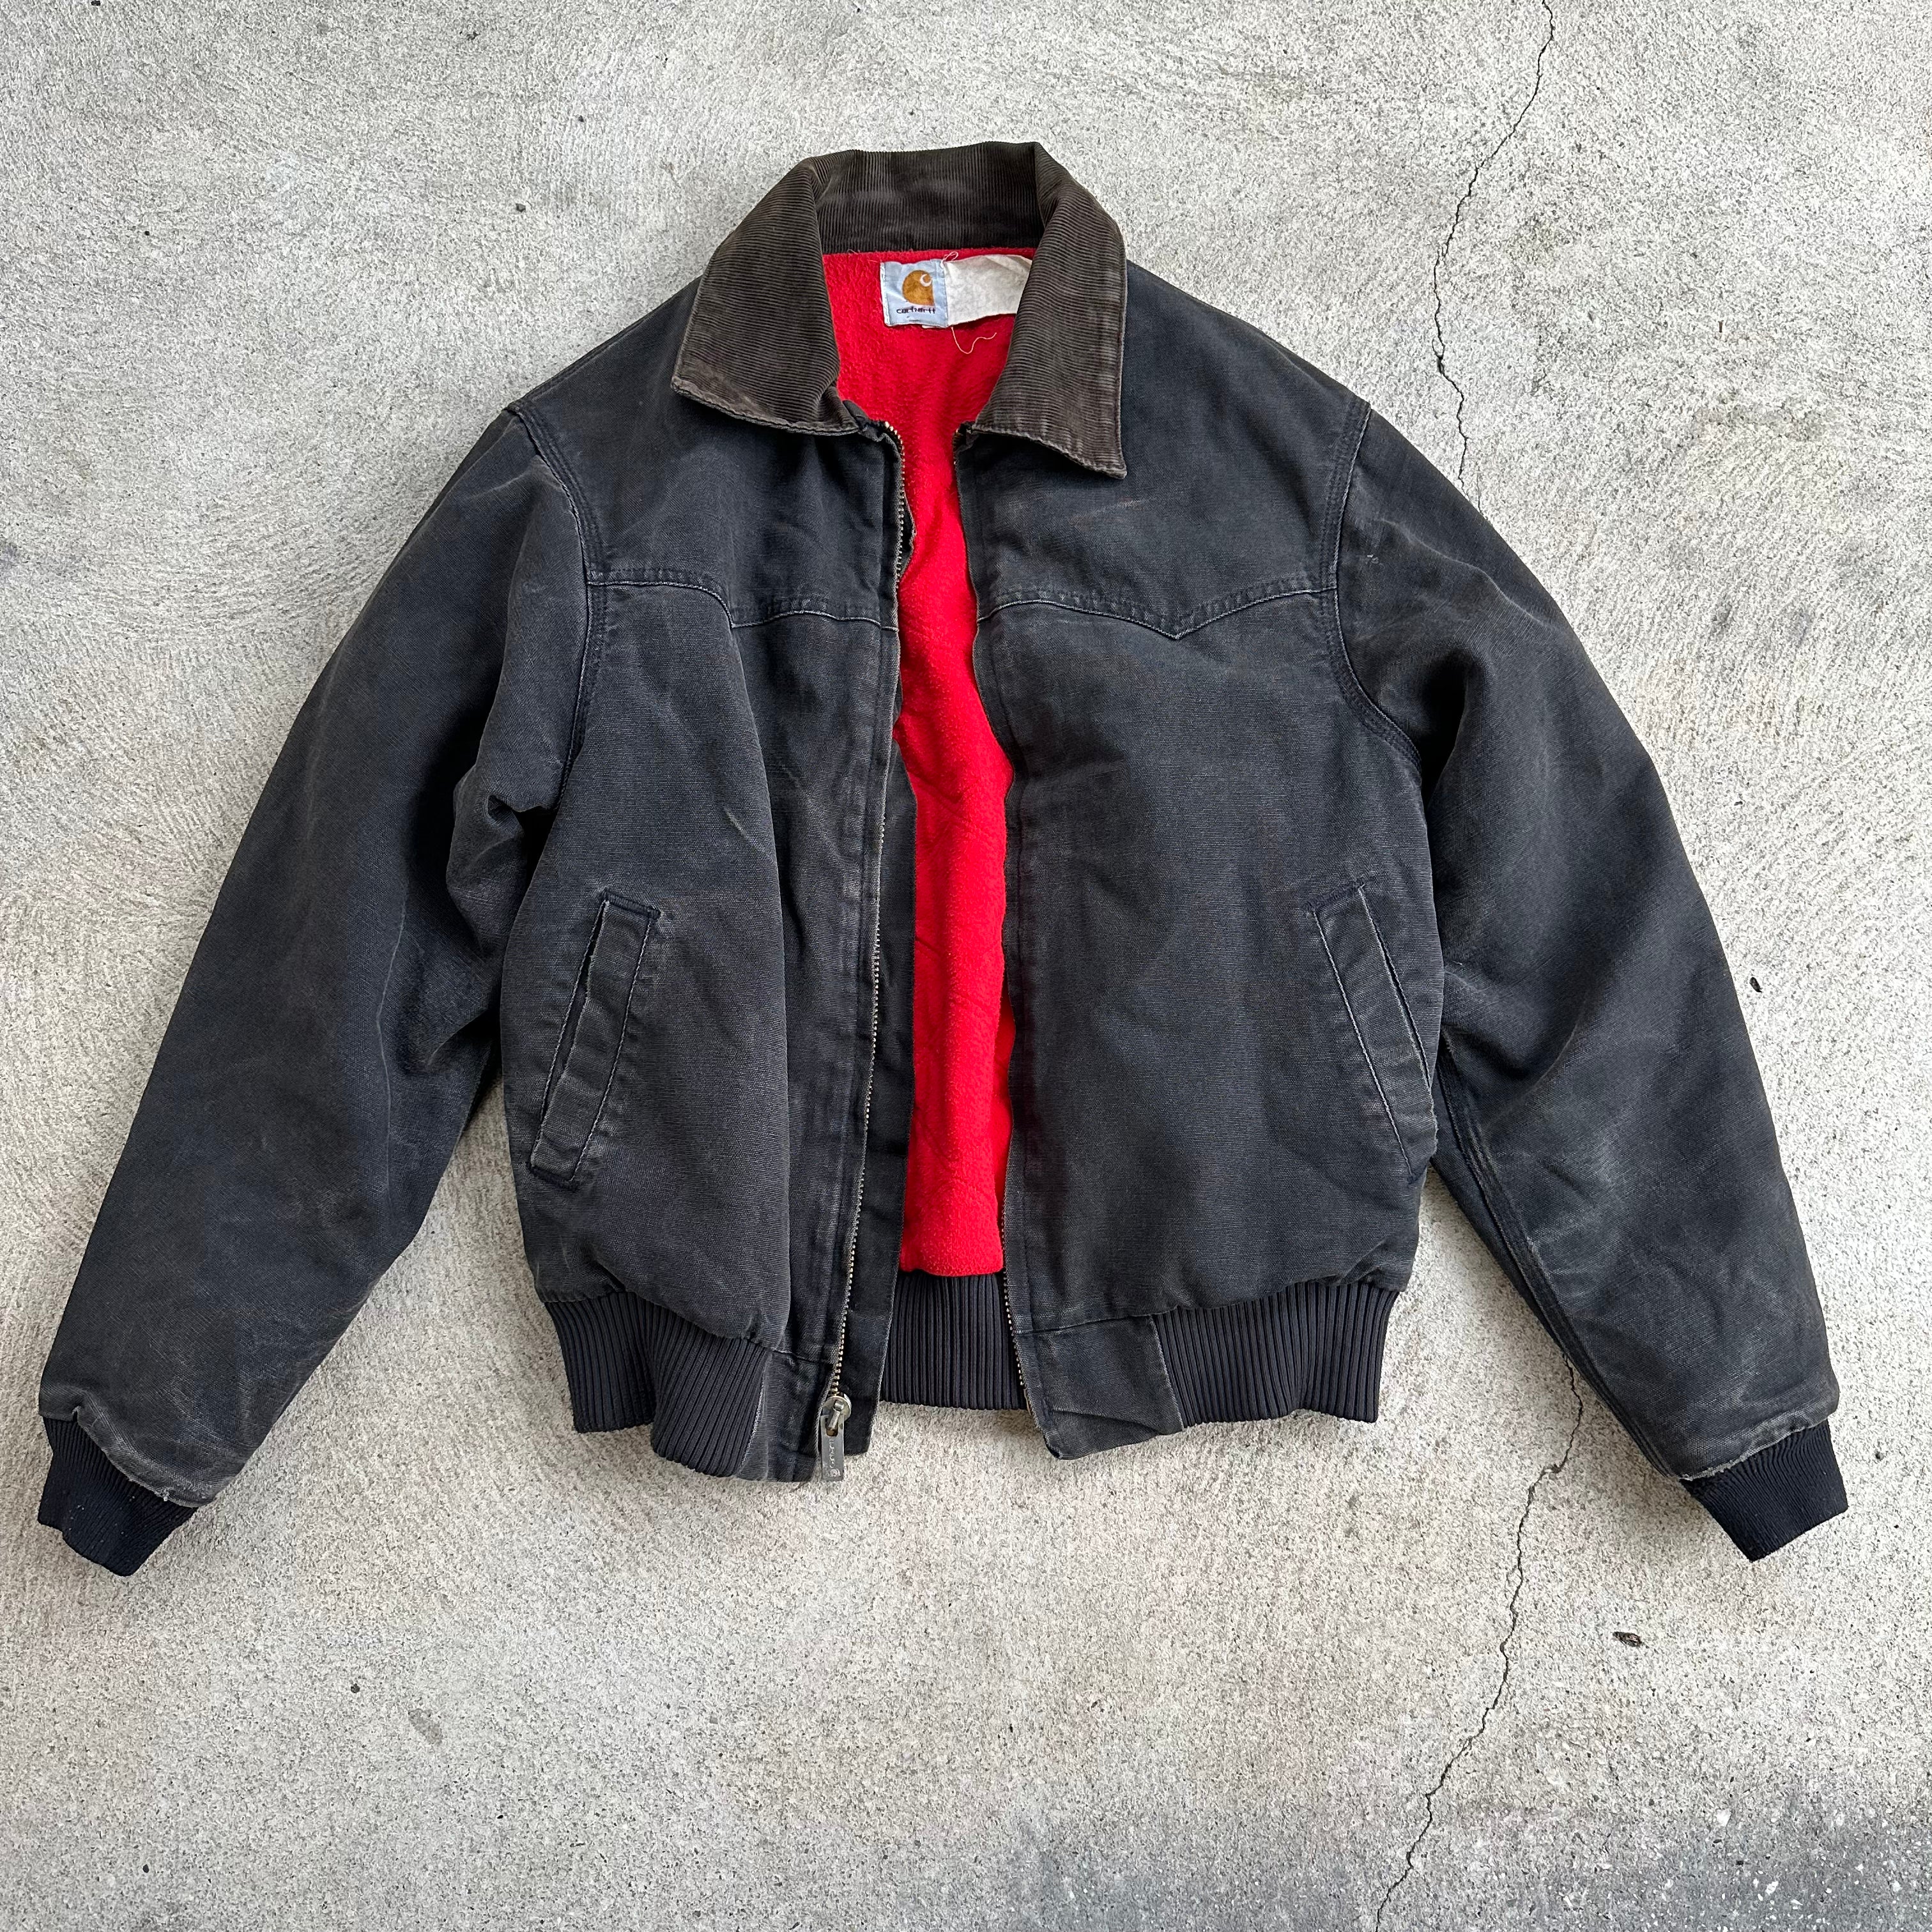 Carhartt Washed Black Work Jacket (fits like an M)